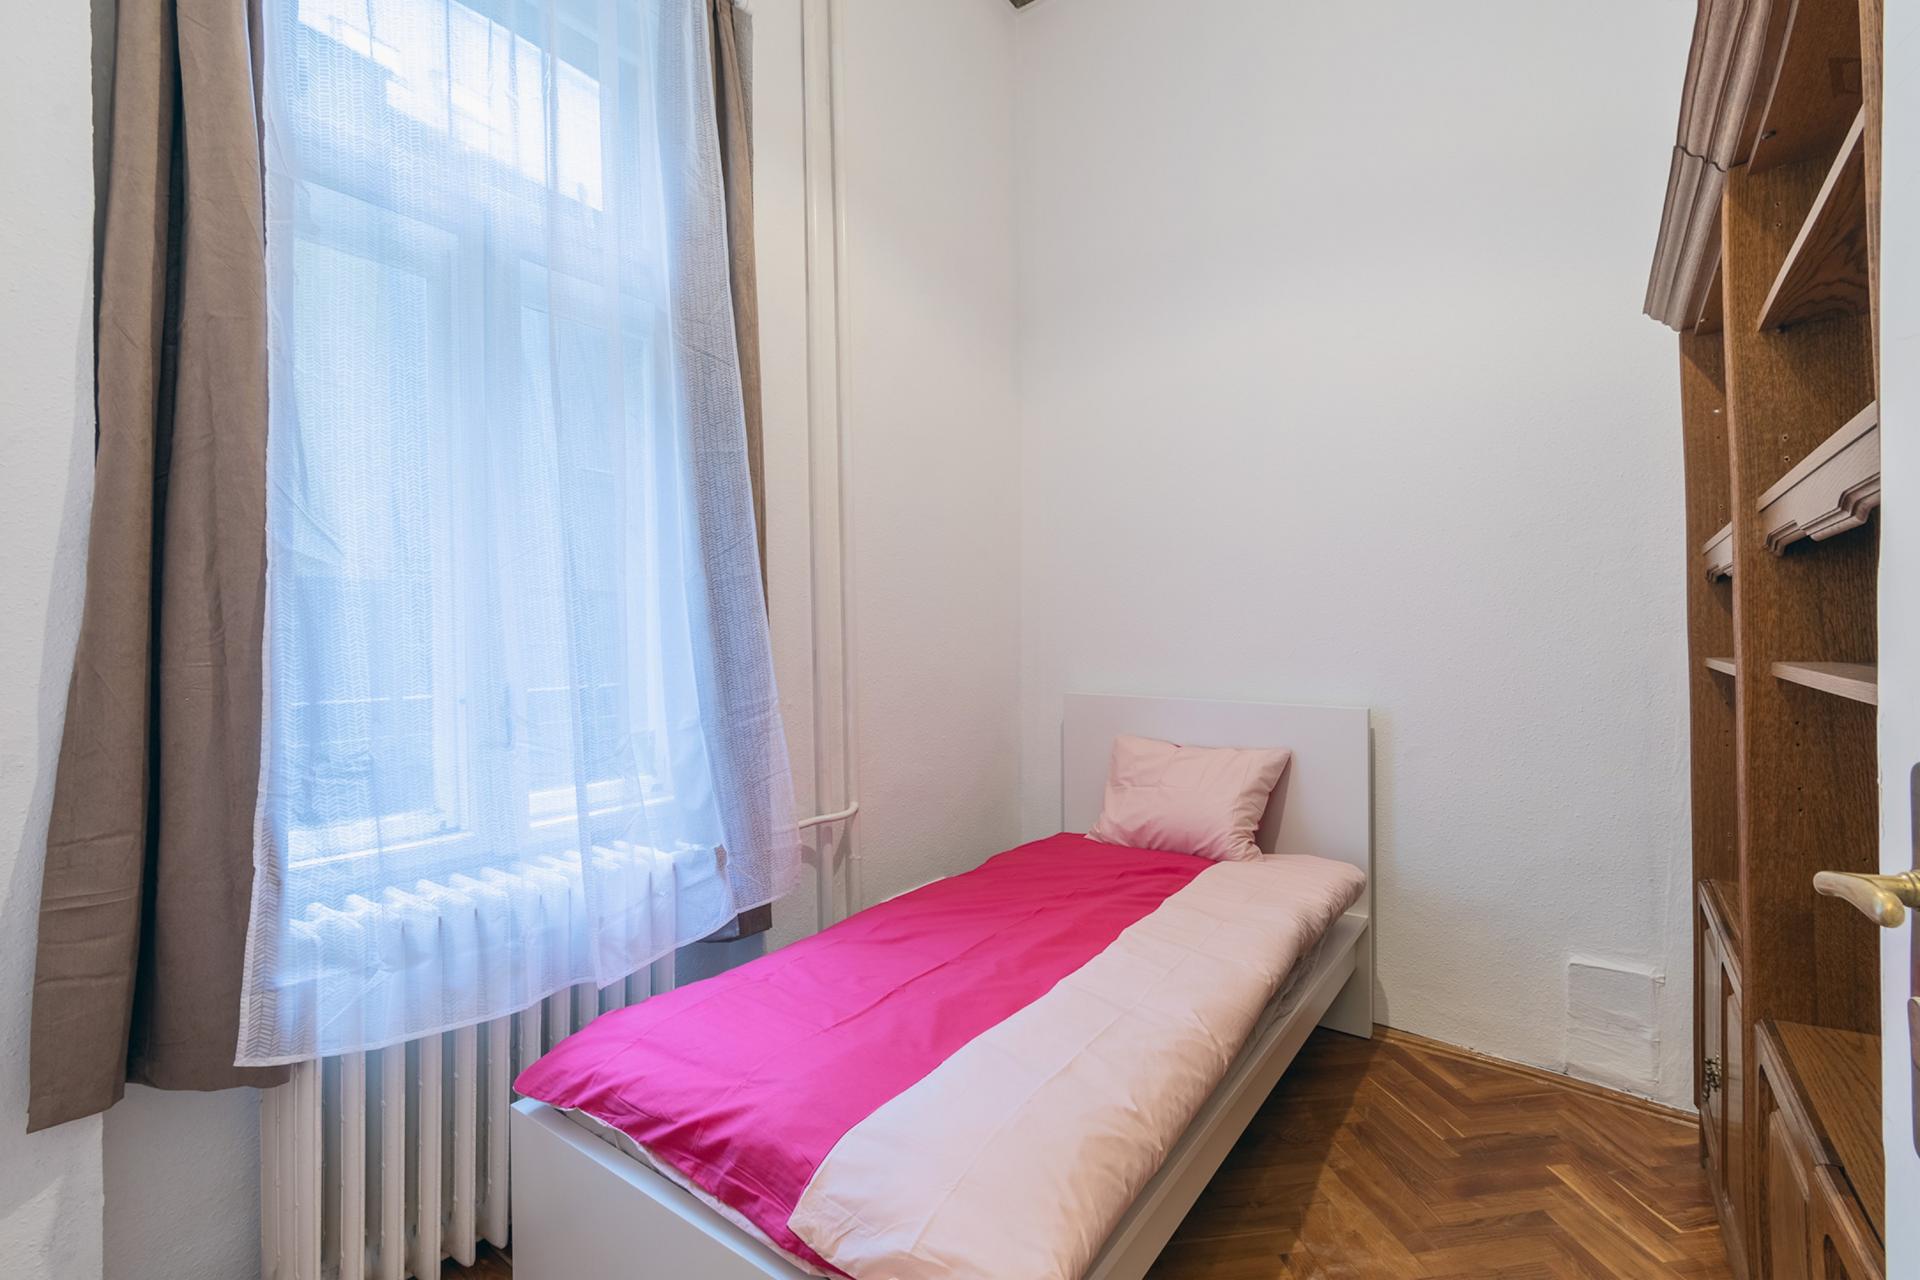 Falk - Single bedroom residence Budapest